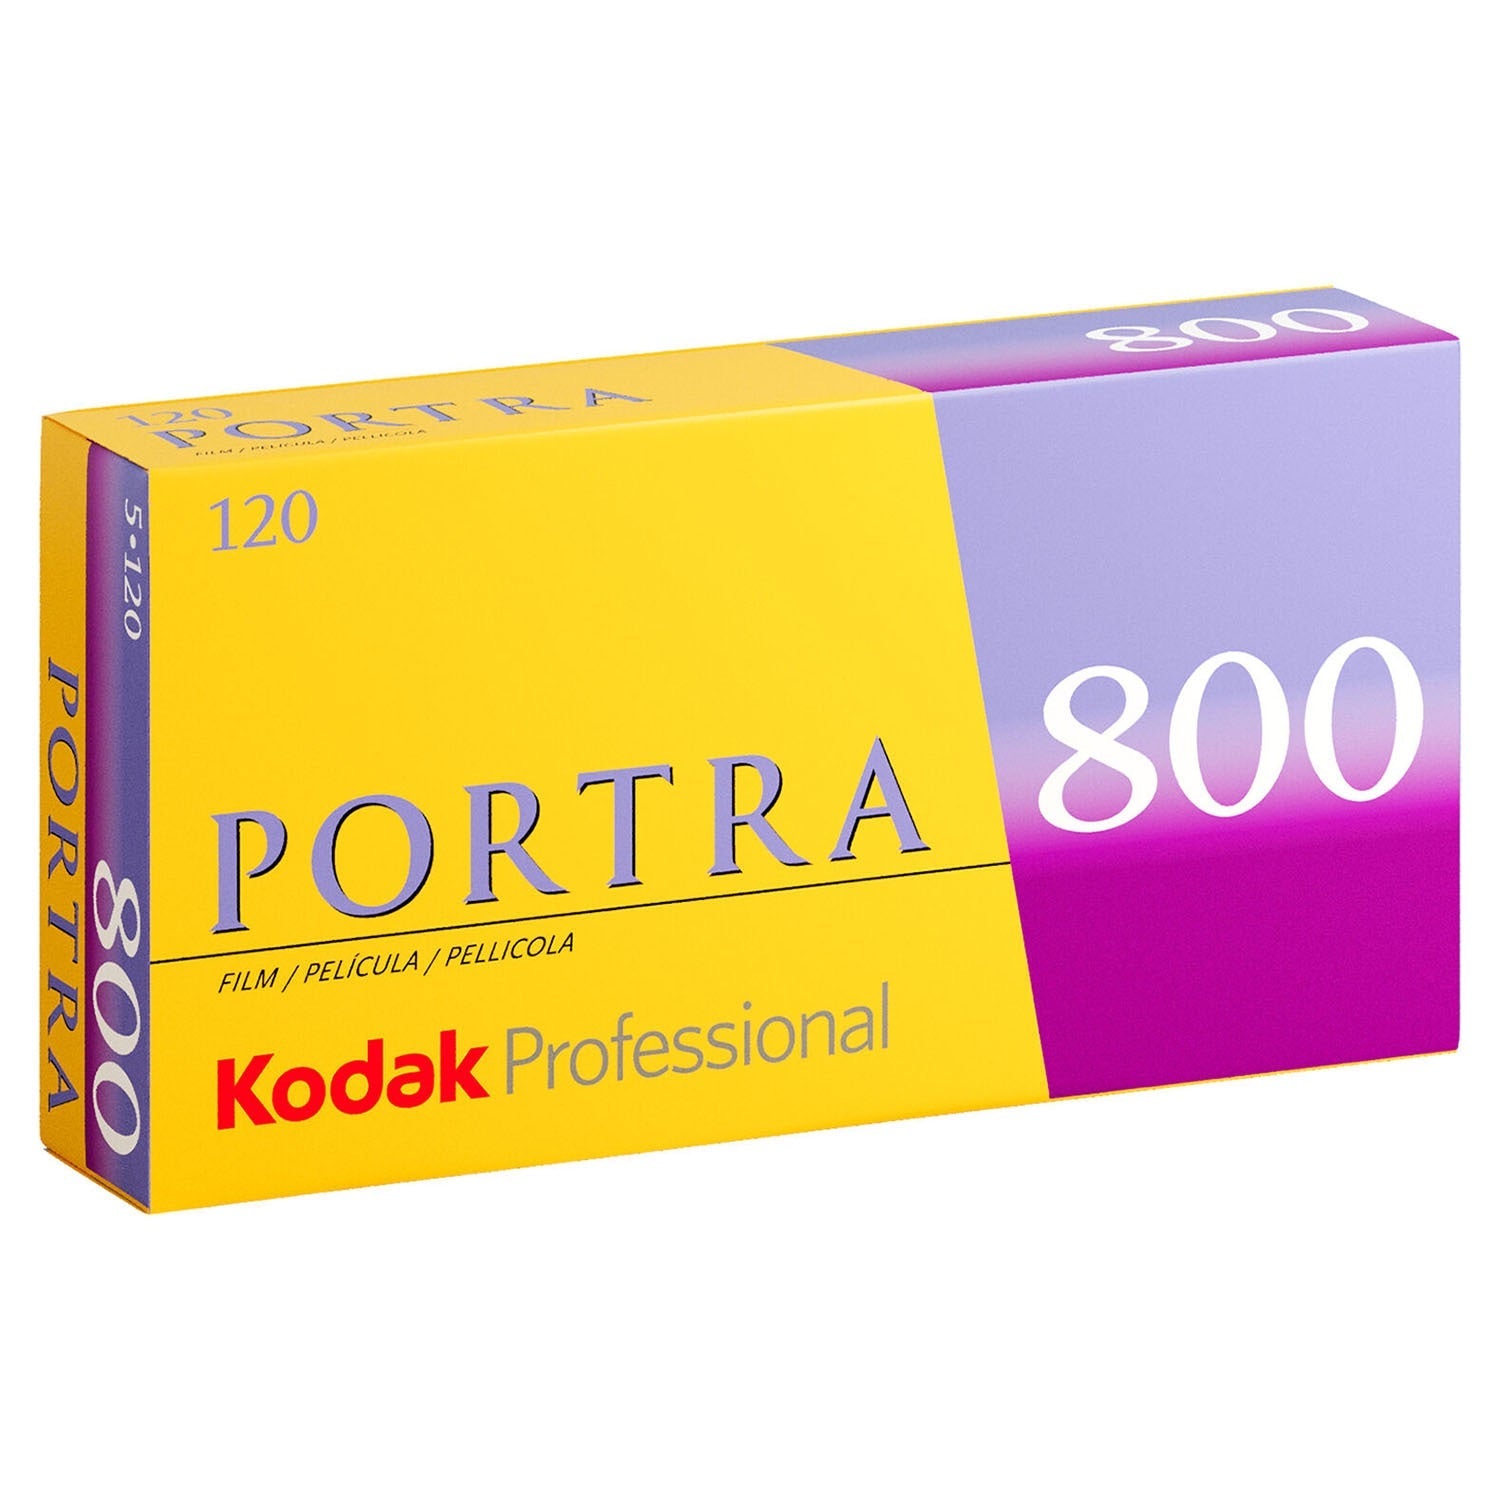 Kodak Portra 800 - 120